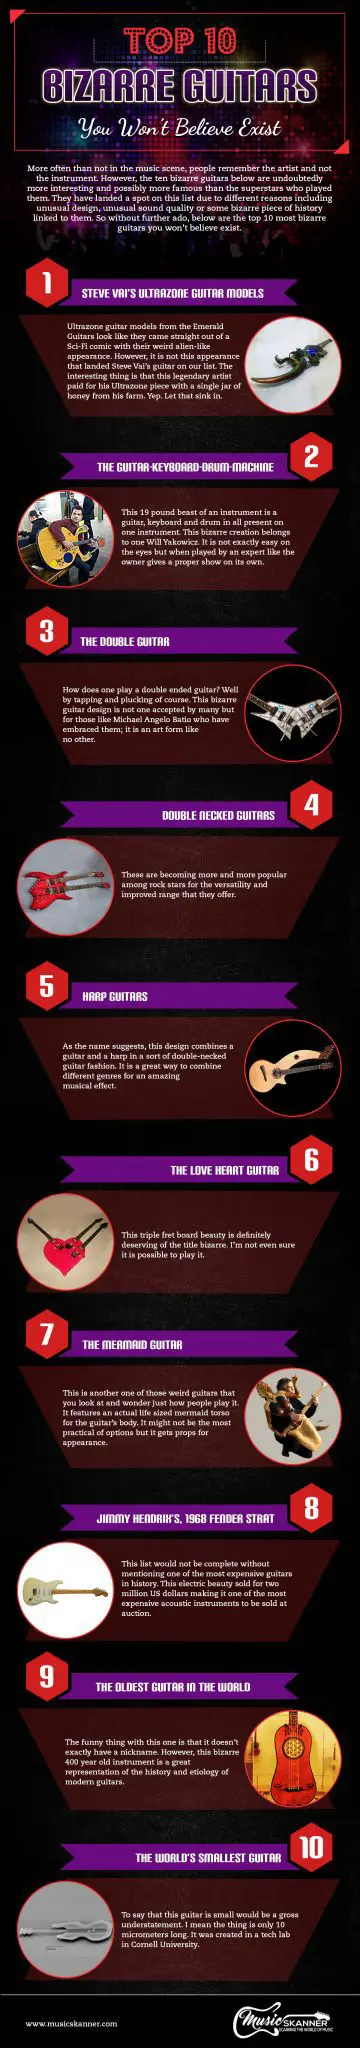 Most bizarre guitars infographic